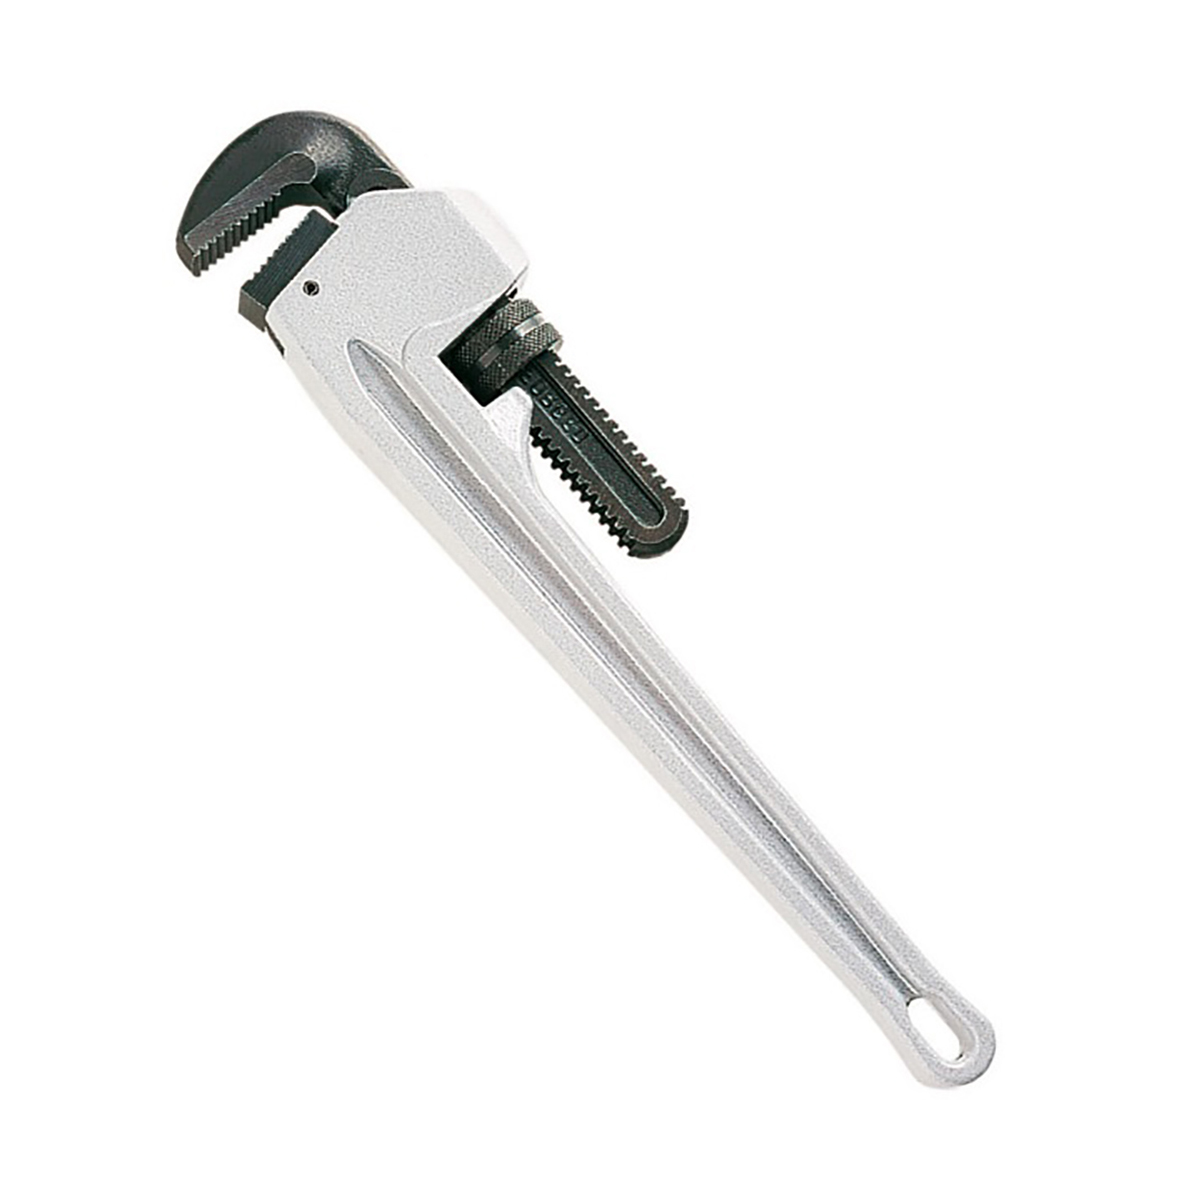 Virax 10 Rapid Pipe Wrench, VX010123